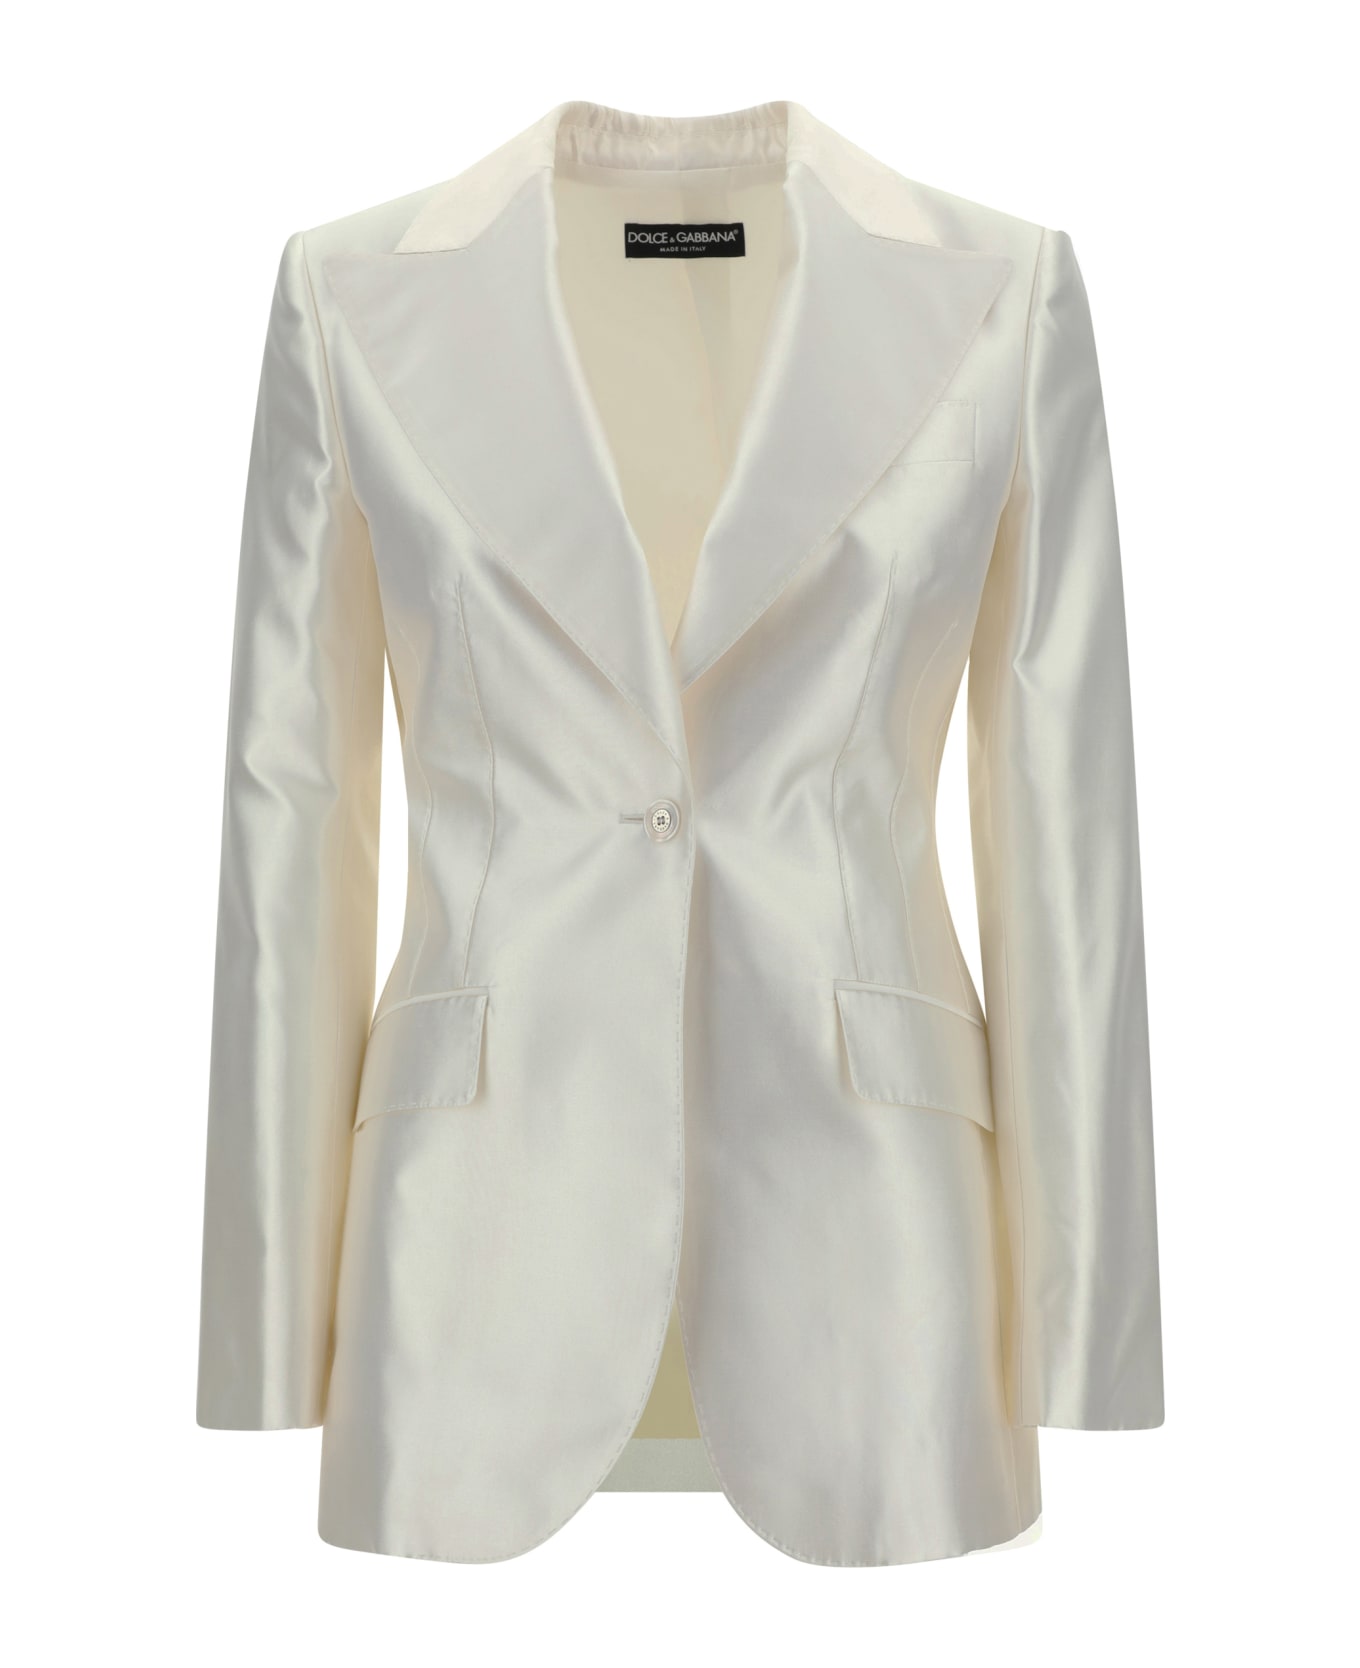 Dolce & Gabbana Blazer Jacket - BIANCO NATURALE (White)